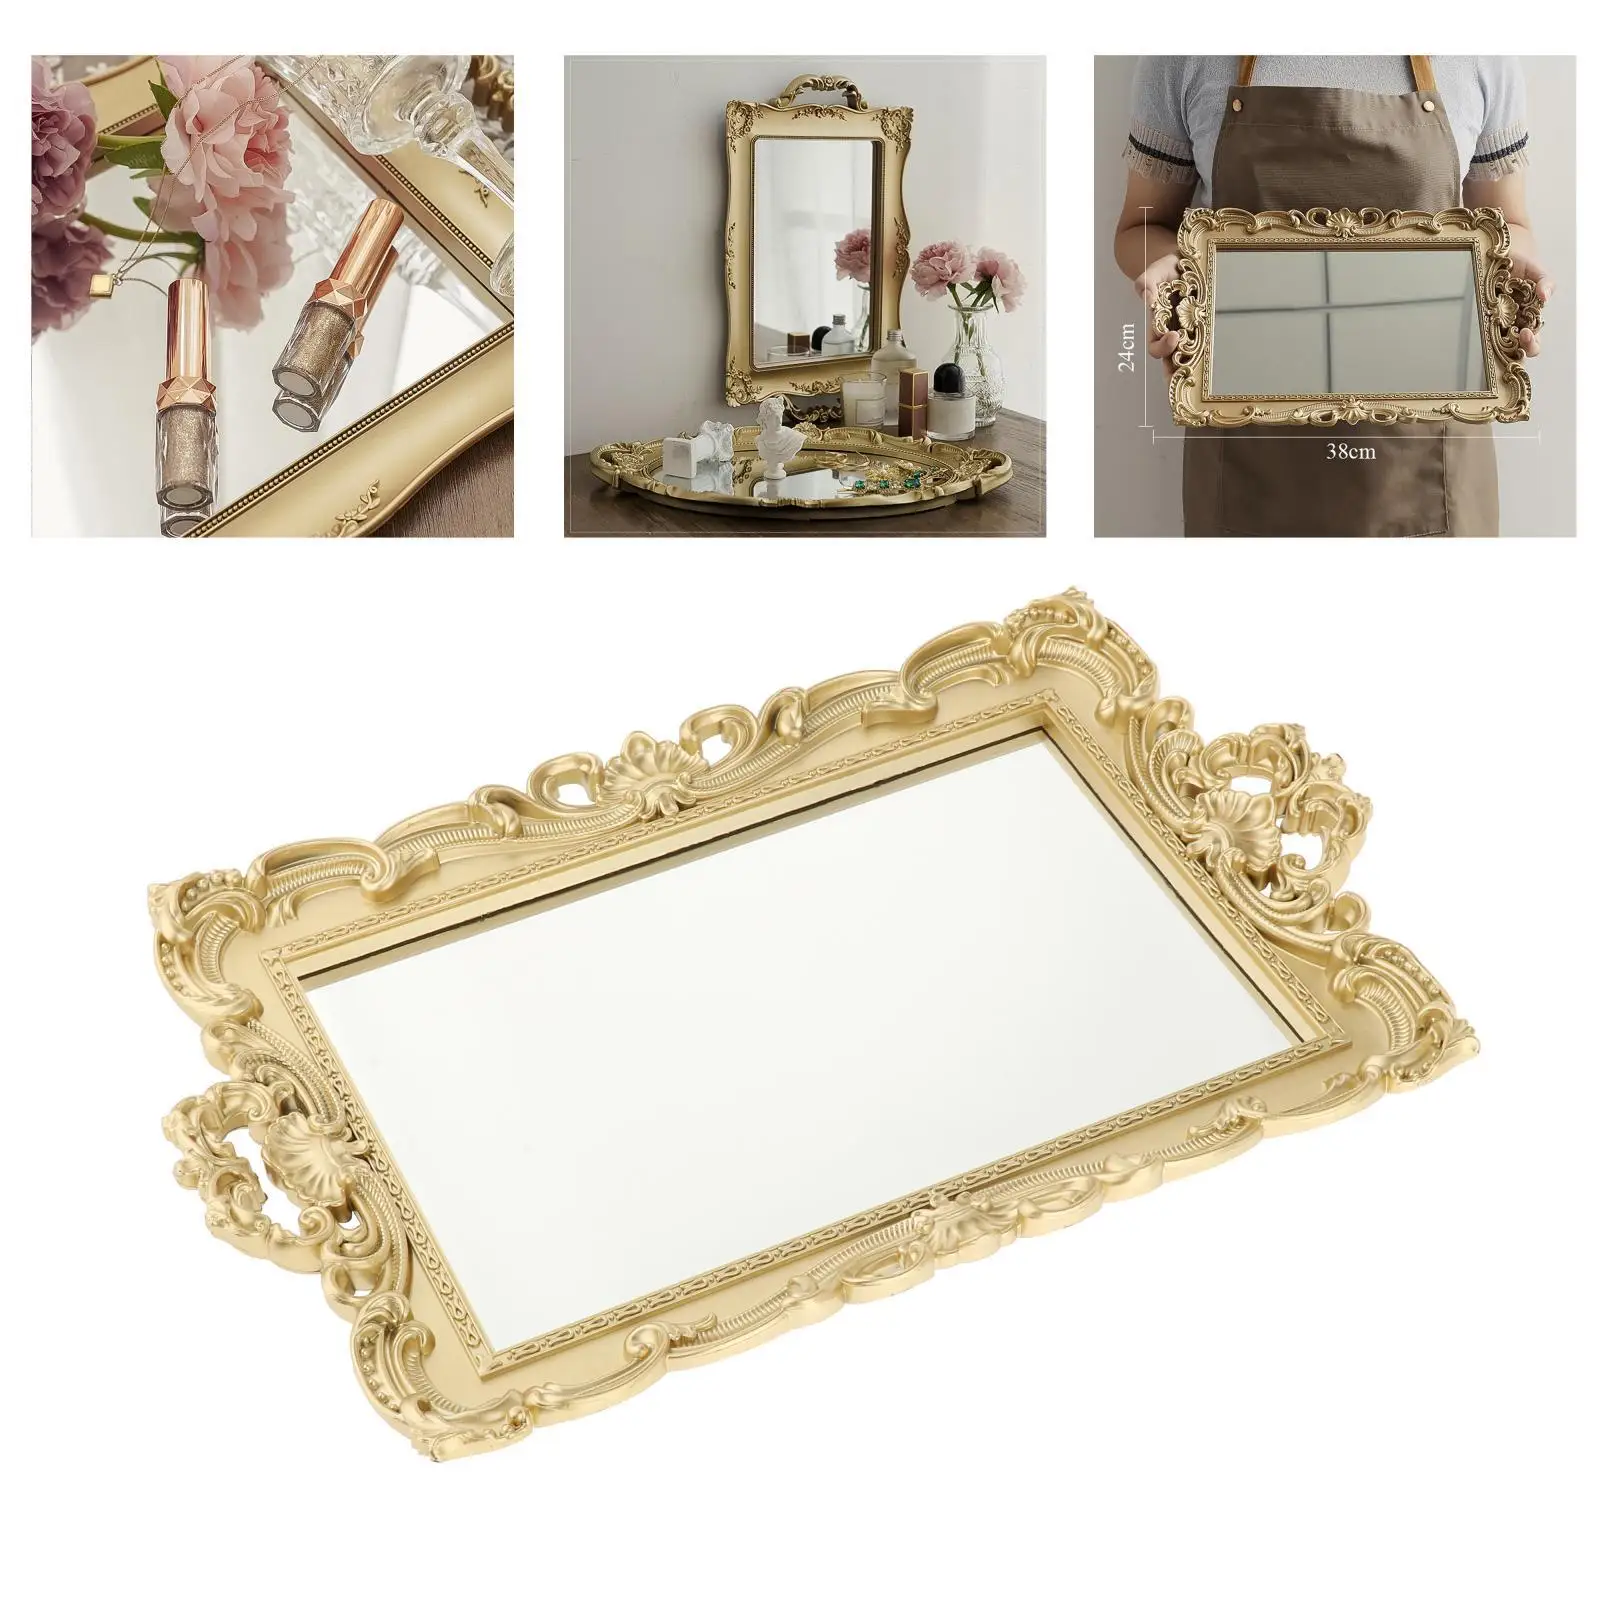  Mirrored Vanity Display Tray Makeup Mirror Case Jewelry Cosmetic Perfume Organizer Photo Props Desktop Ornaments